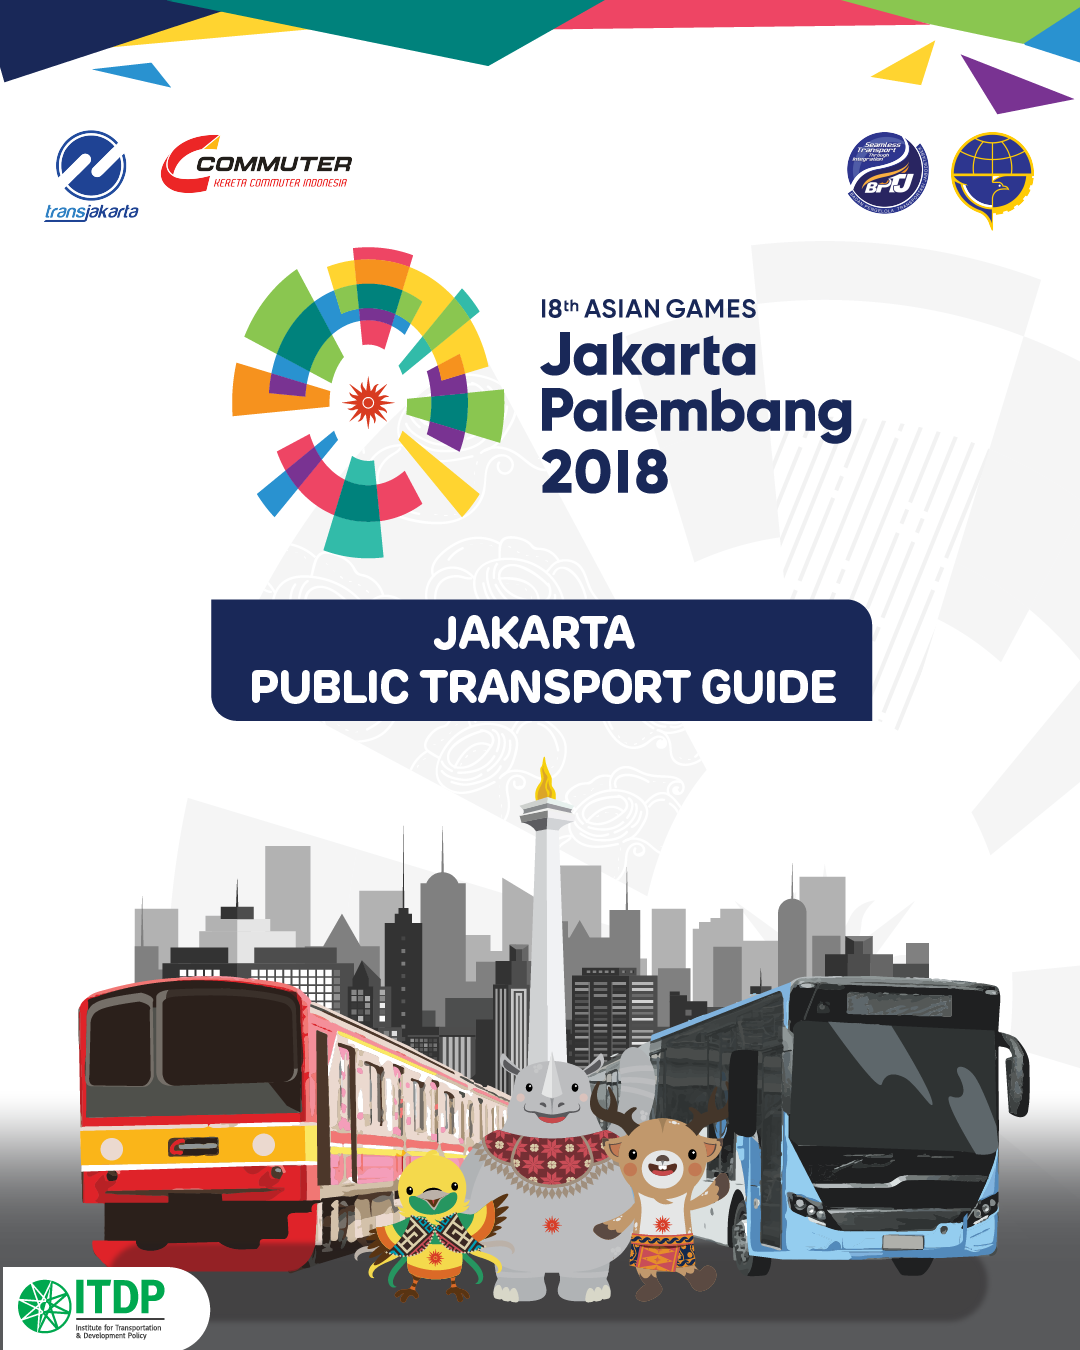 18th Asian Games Jakarta Public Transport Guide 2018